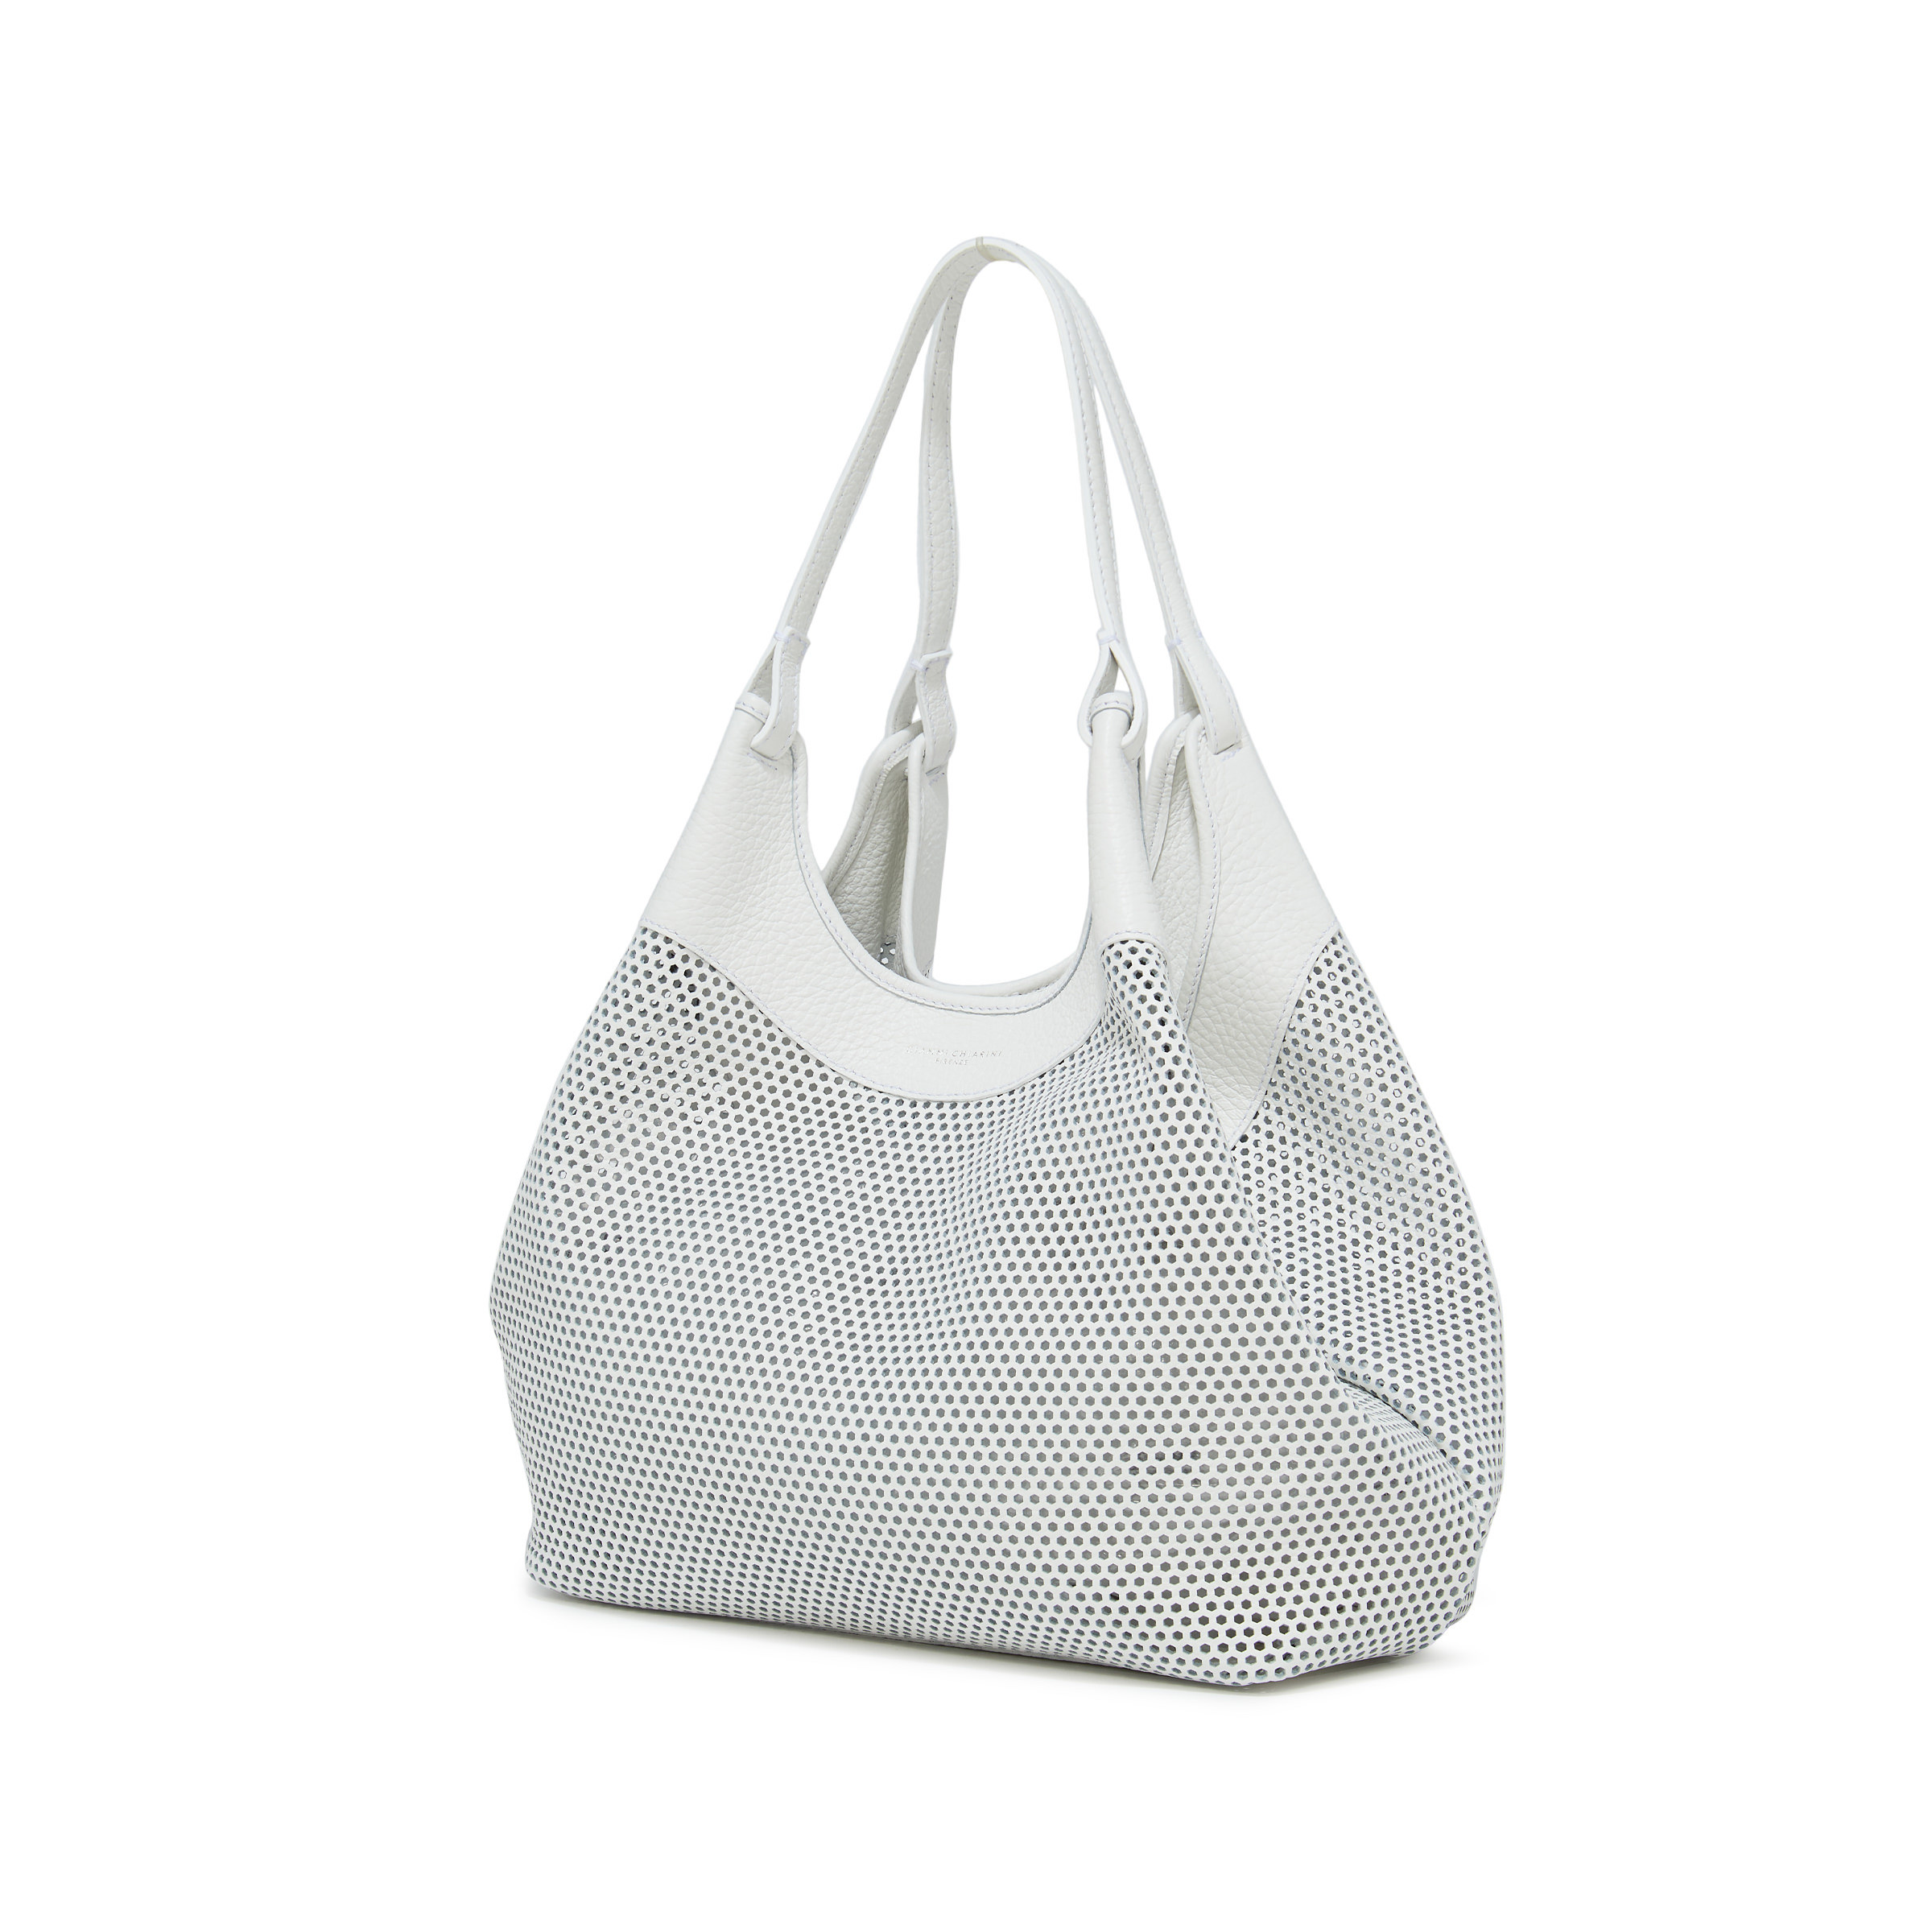 Gianni Chiarini - Dua bag in leather, White, large image number 1